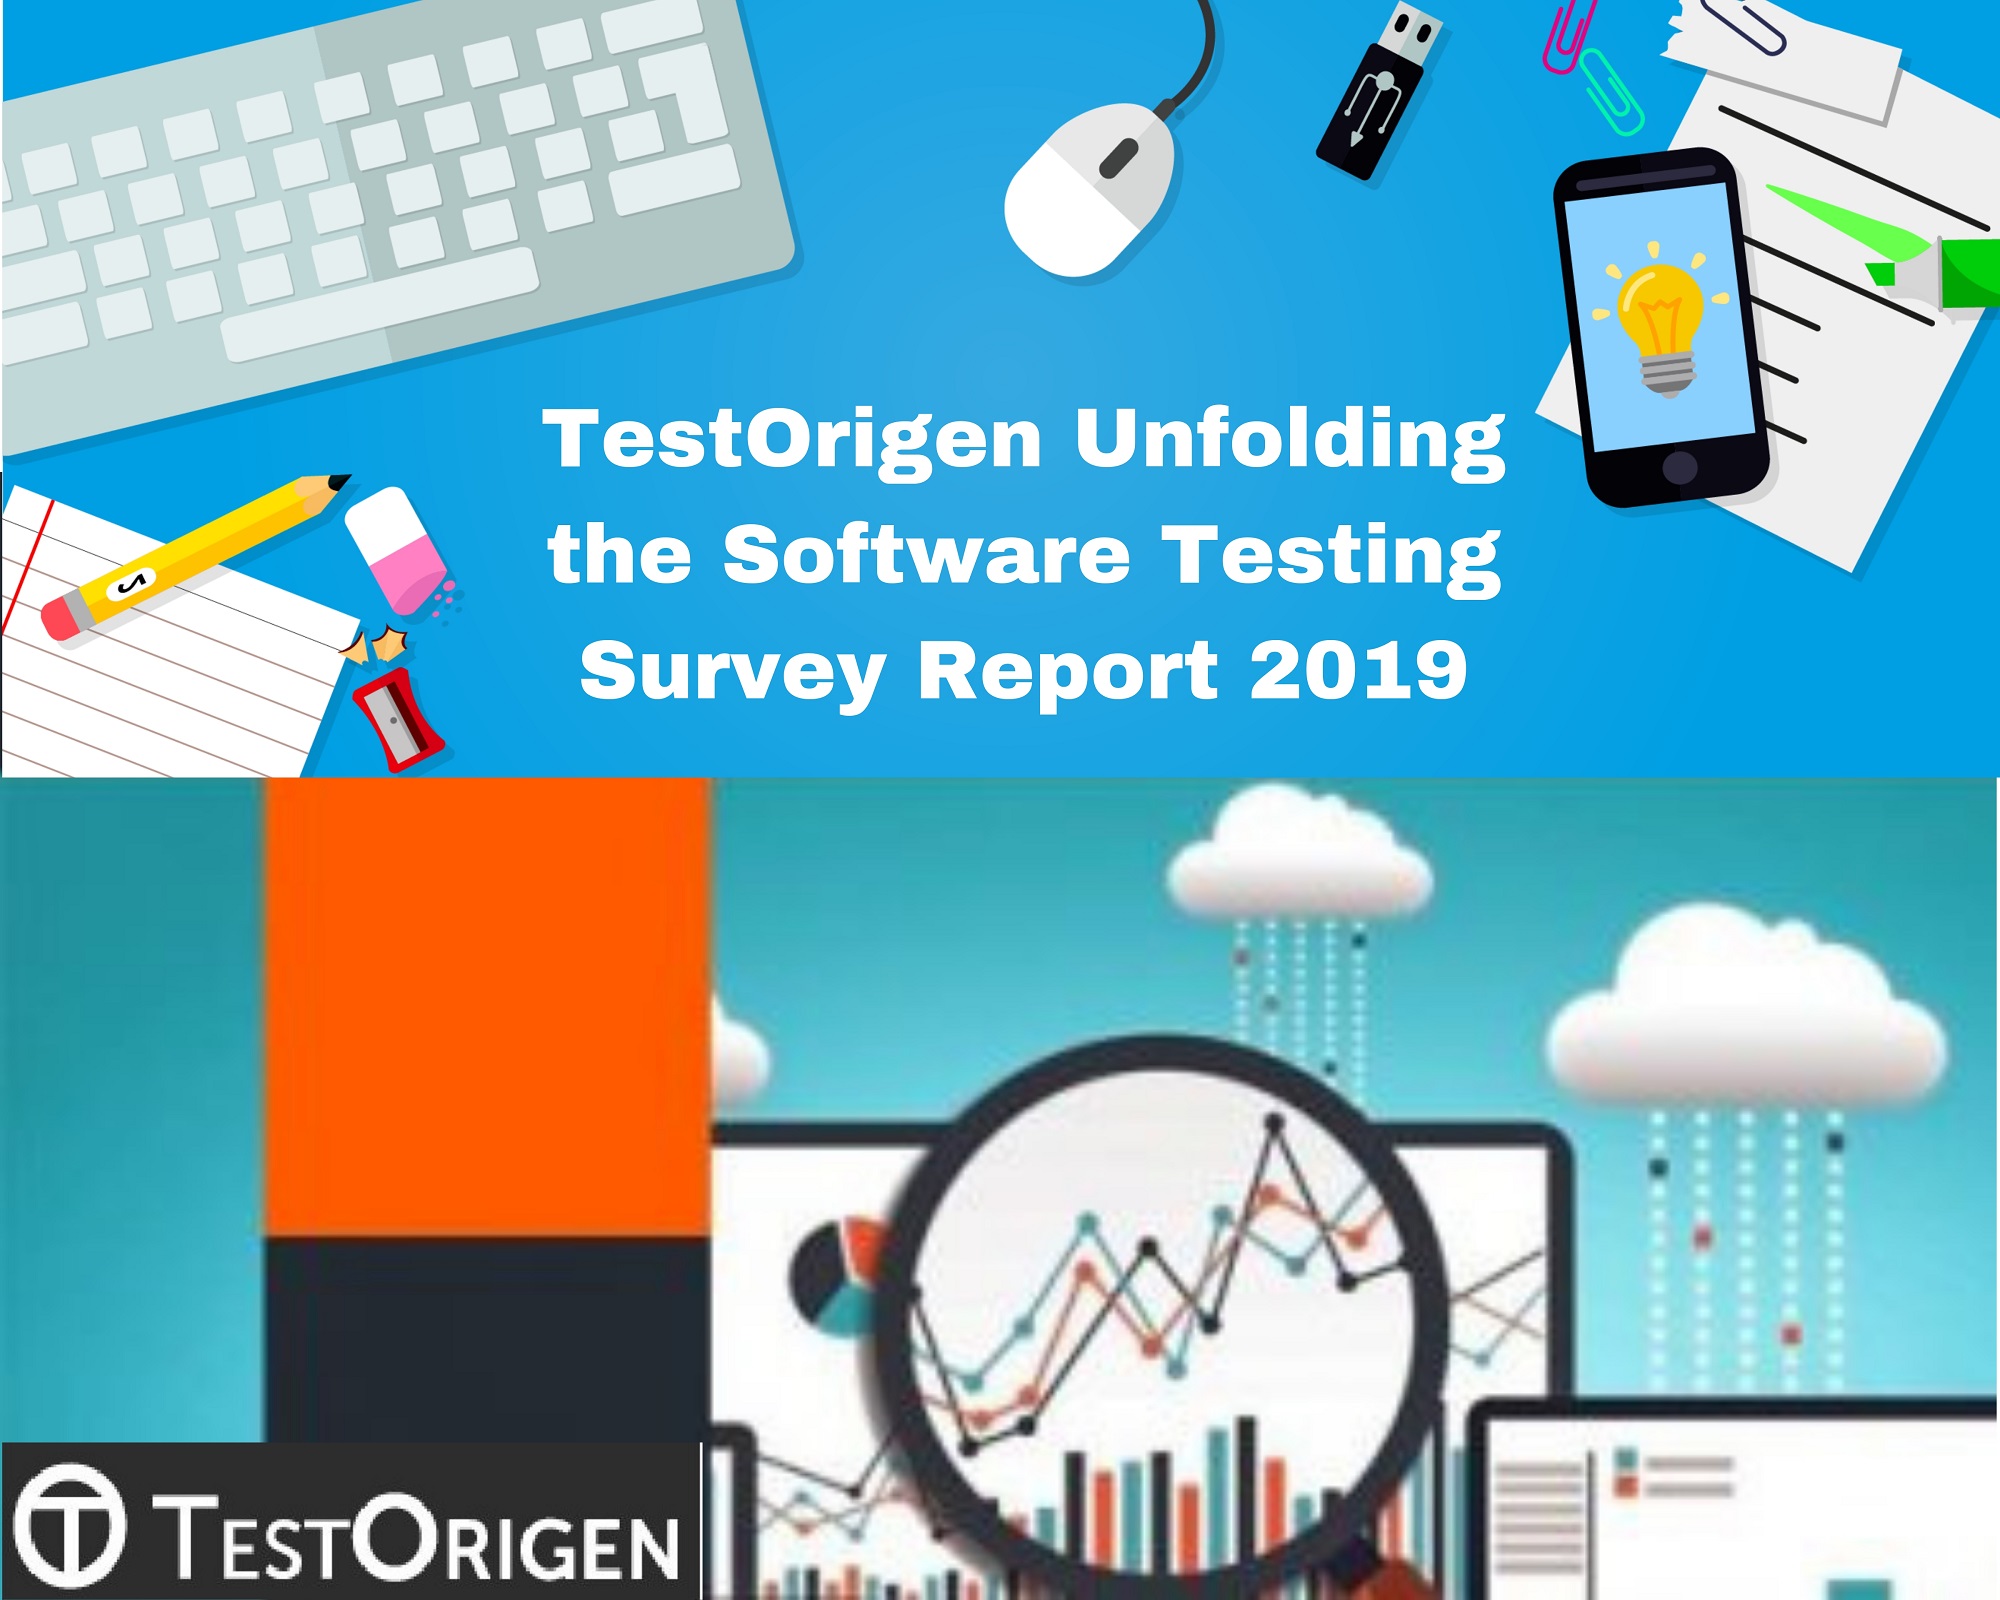 TestOrigen Unfolding the Software Testing Survey Report 2019